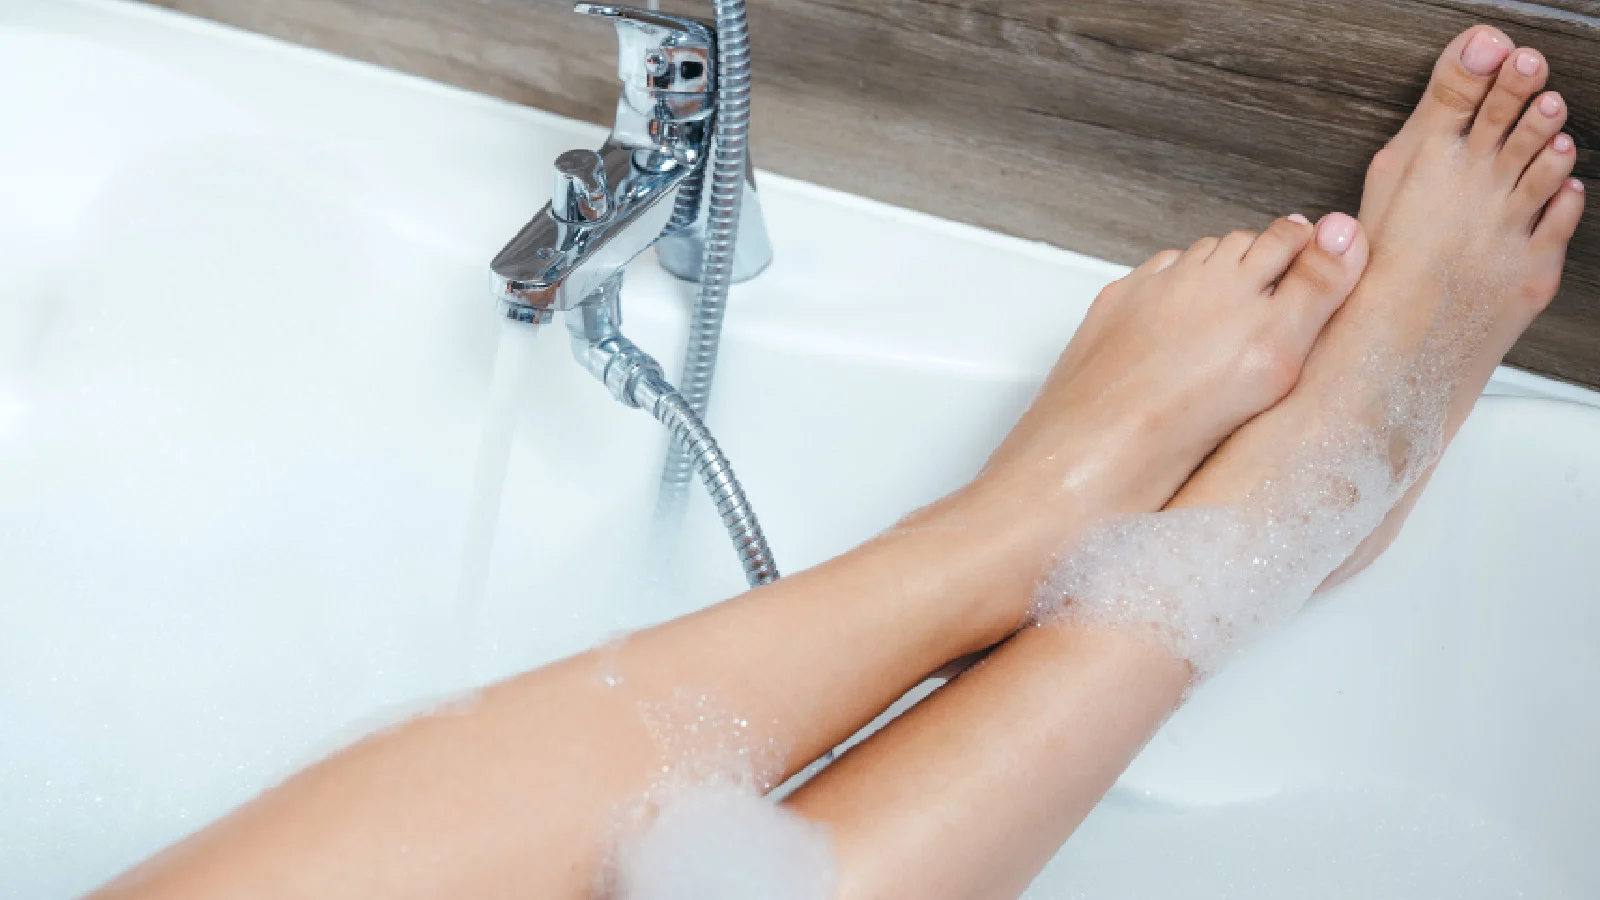 Legs covered in foam in a bathtub